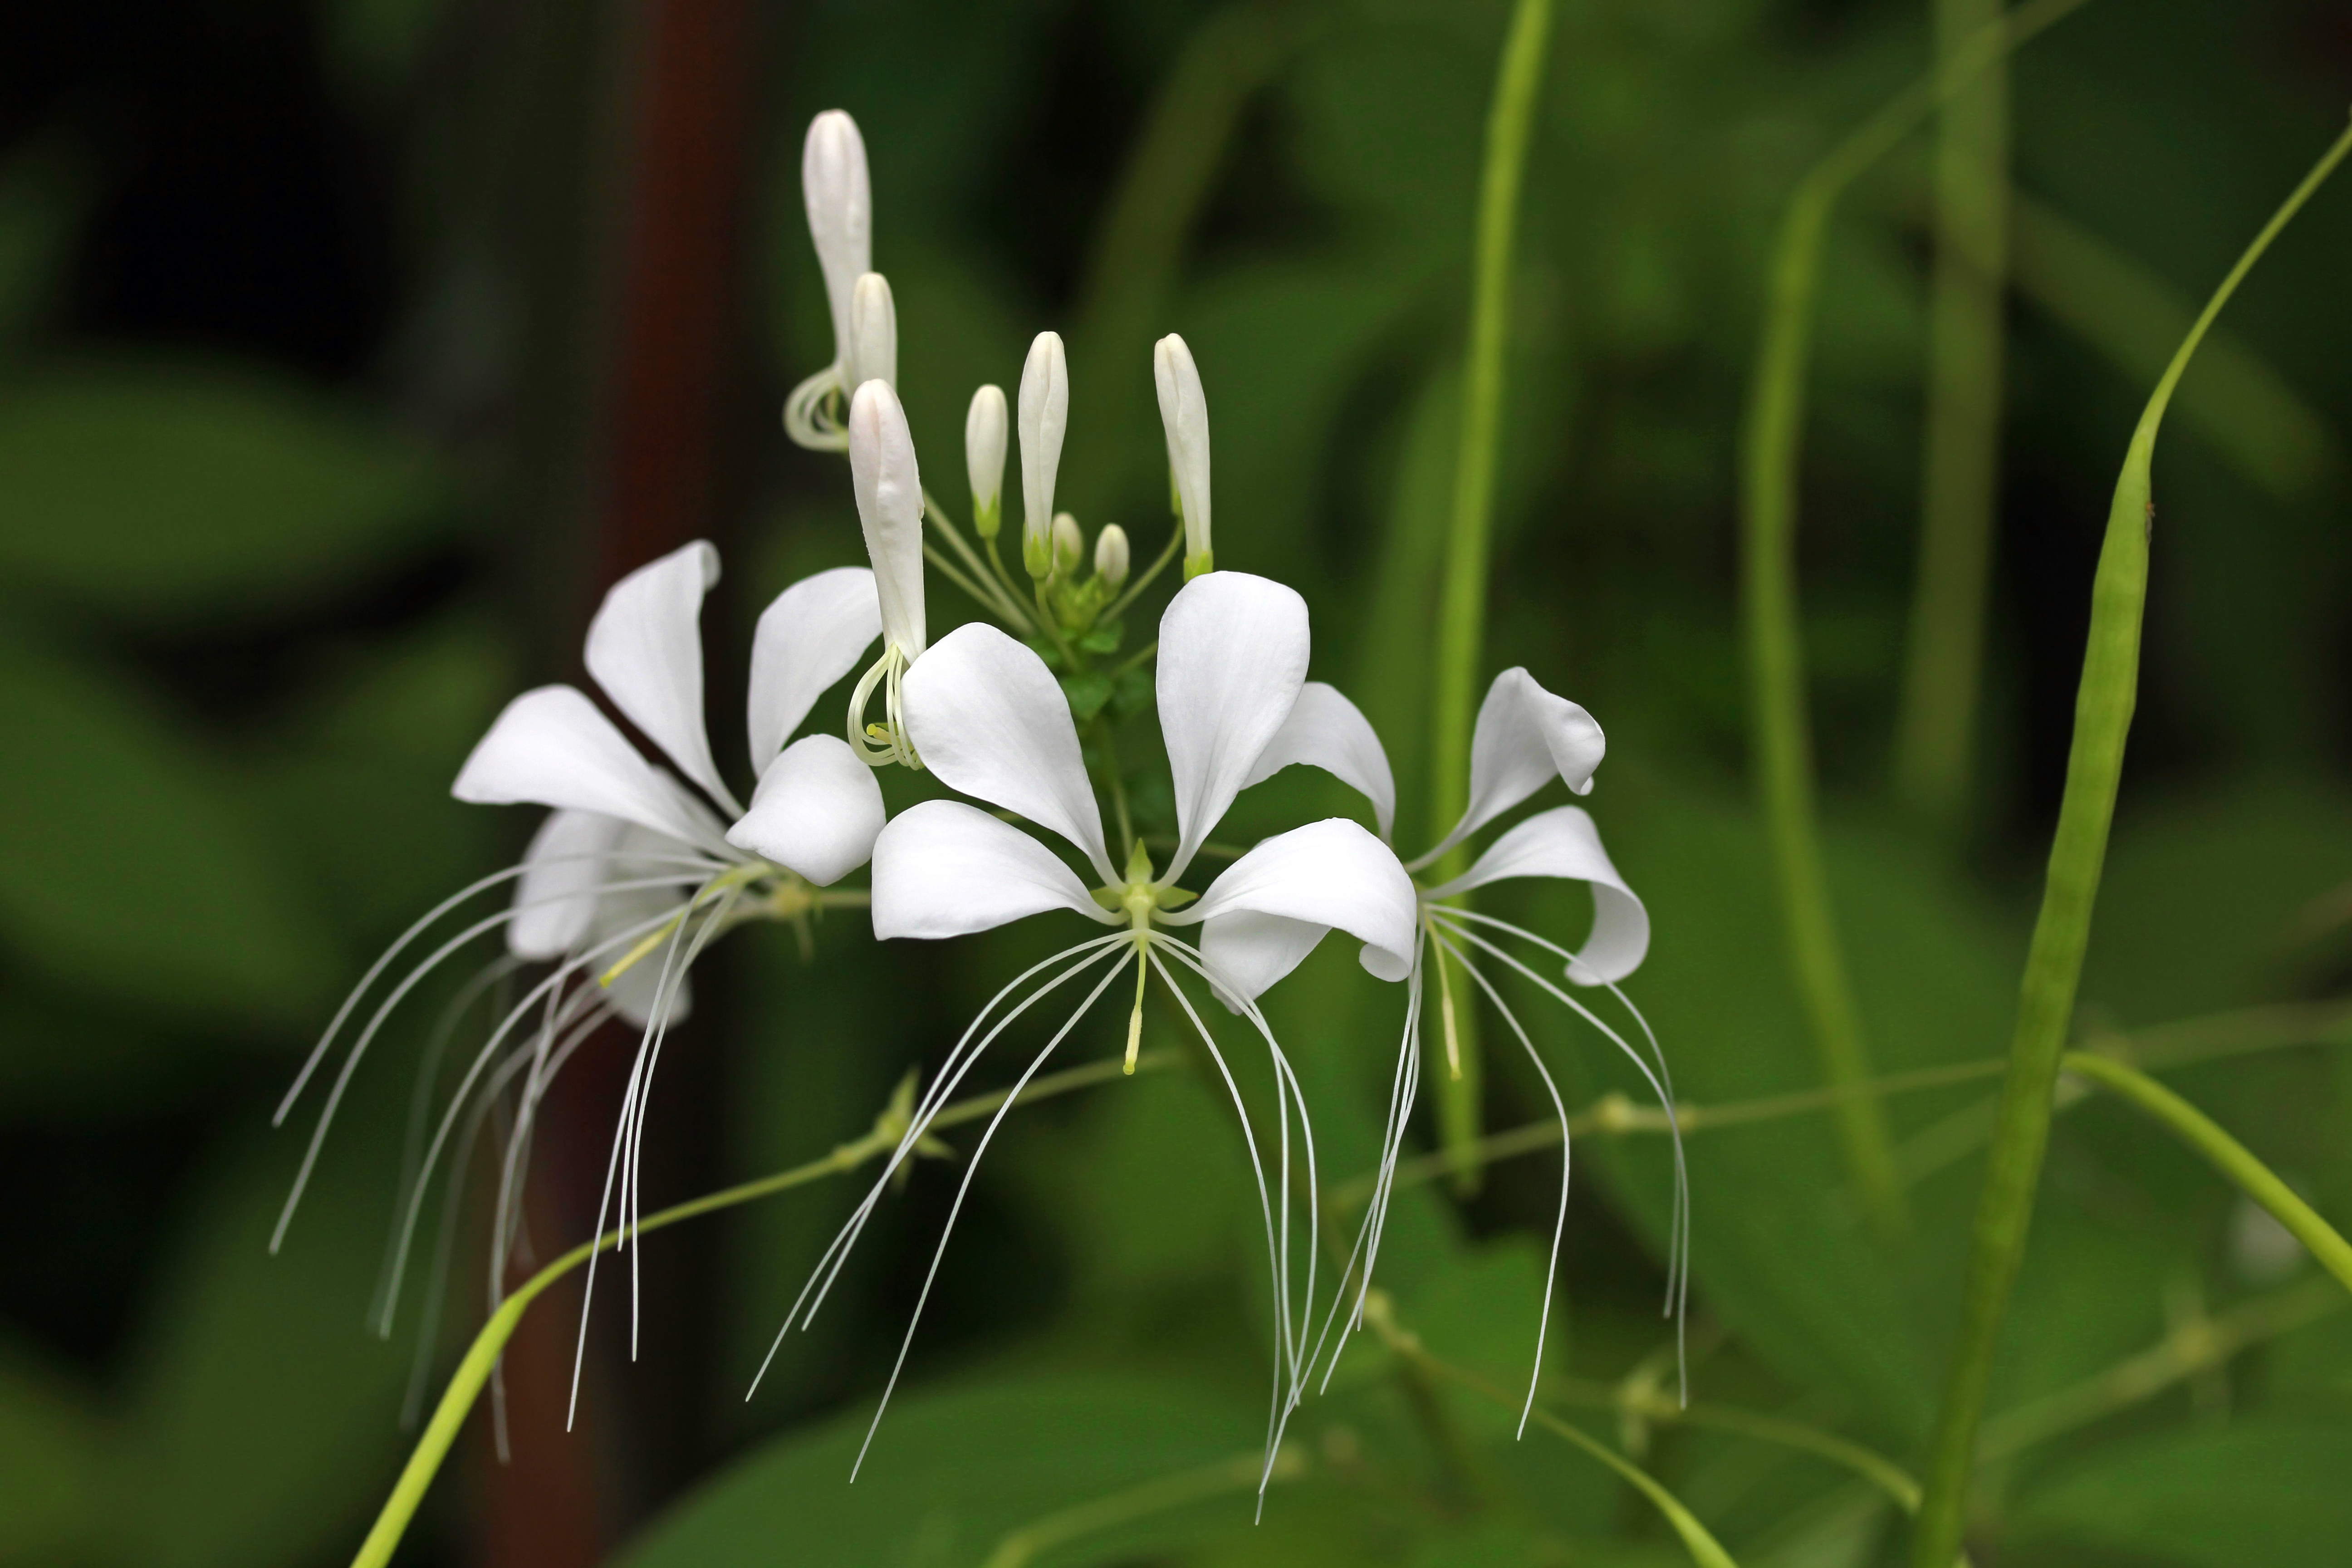 White ginger flower (Hedychium coronarium) growing from a weak green stem